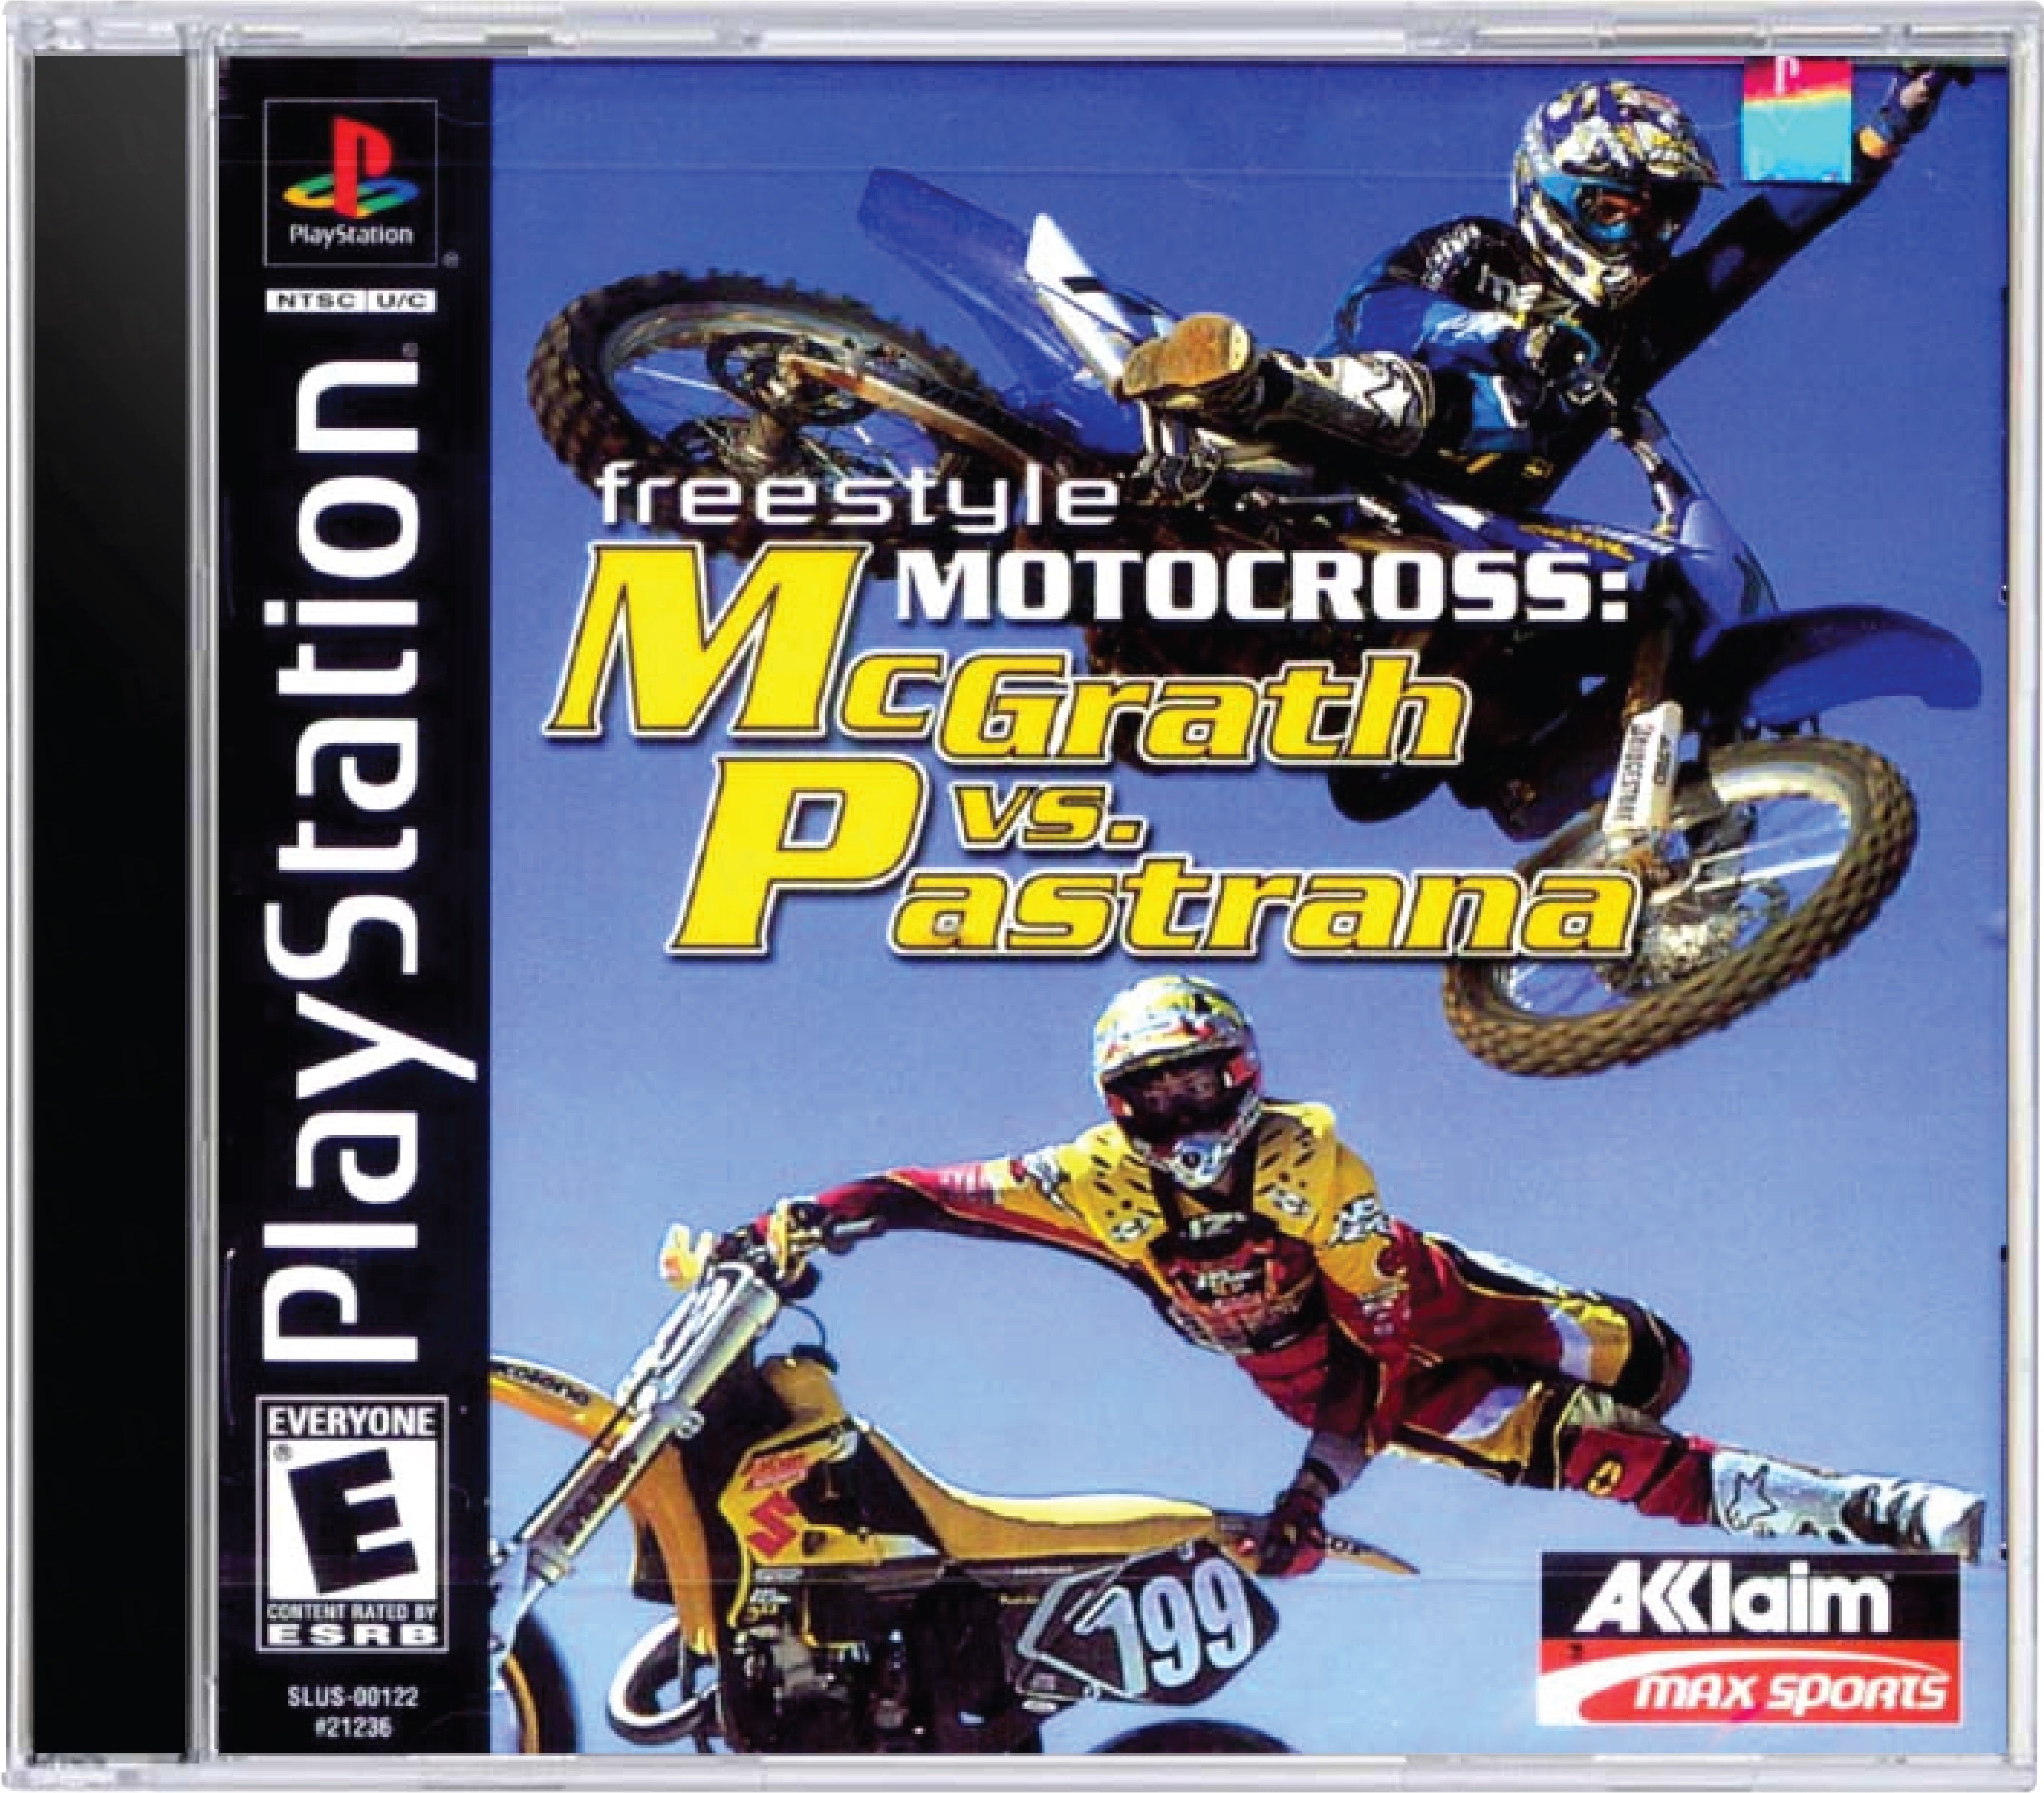 Freestyle Motorcross McGrath vs. Pastrana Cover Art and Product Photo